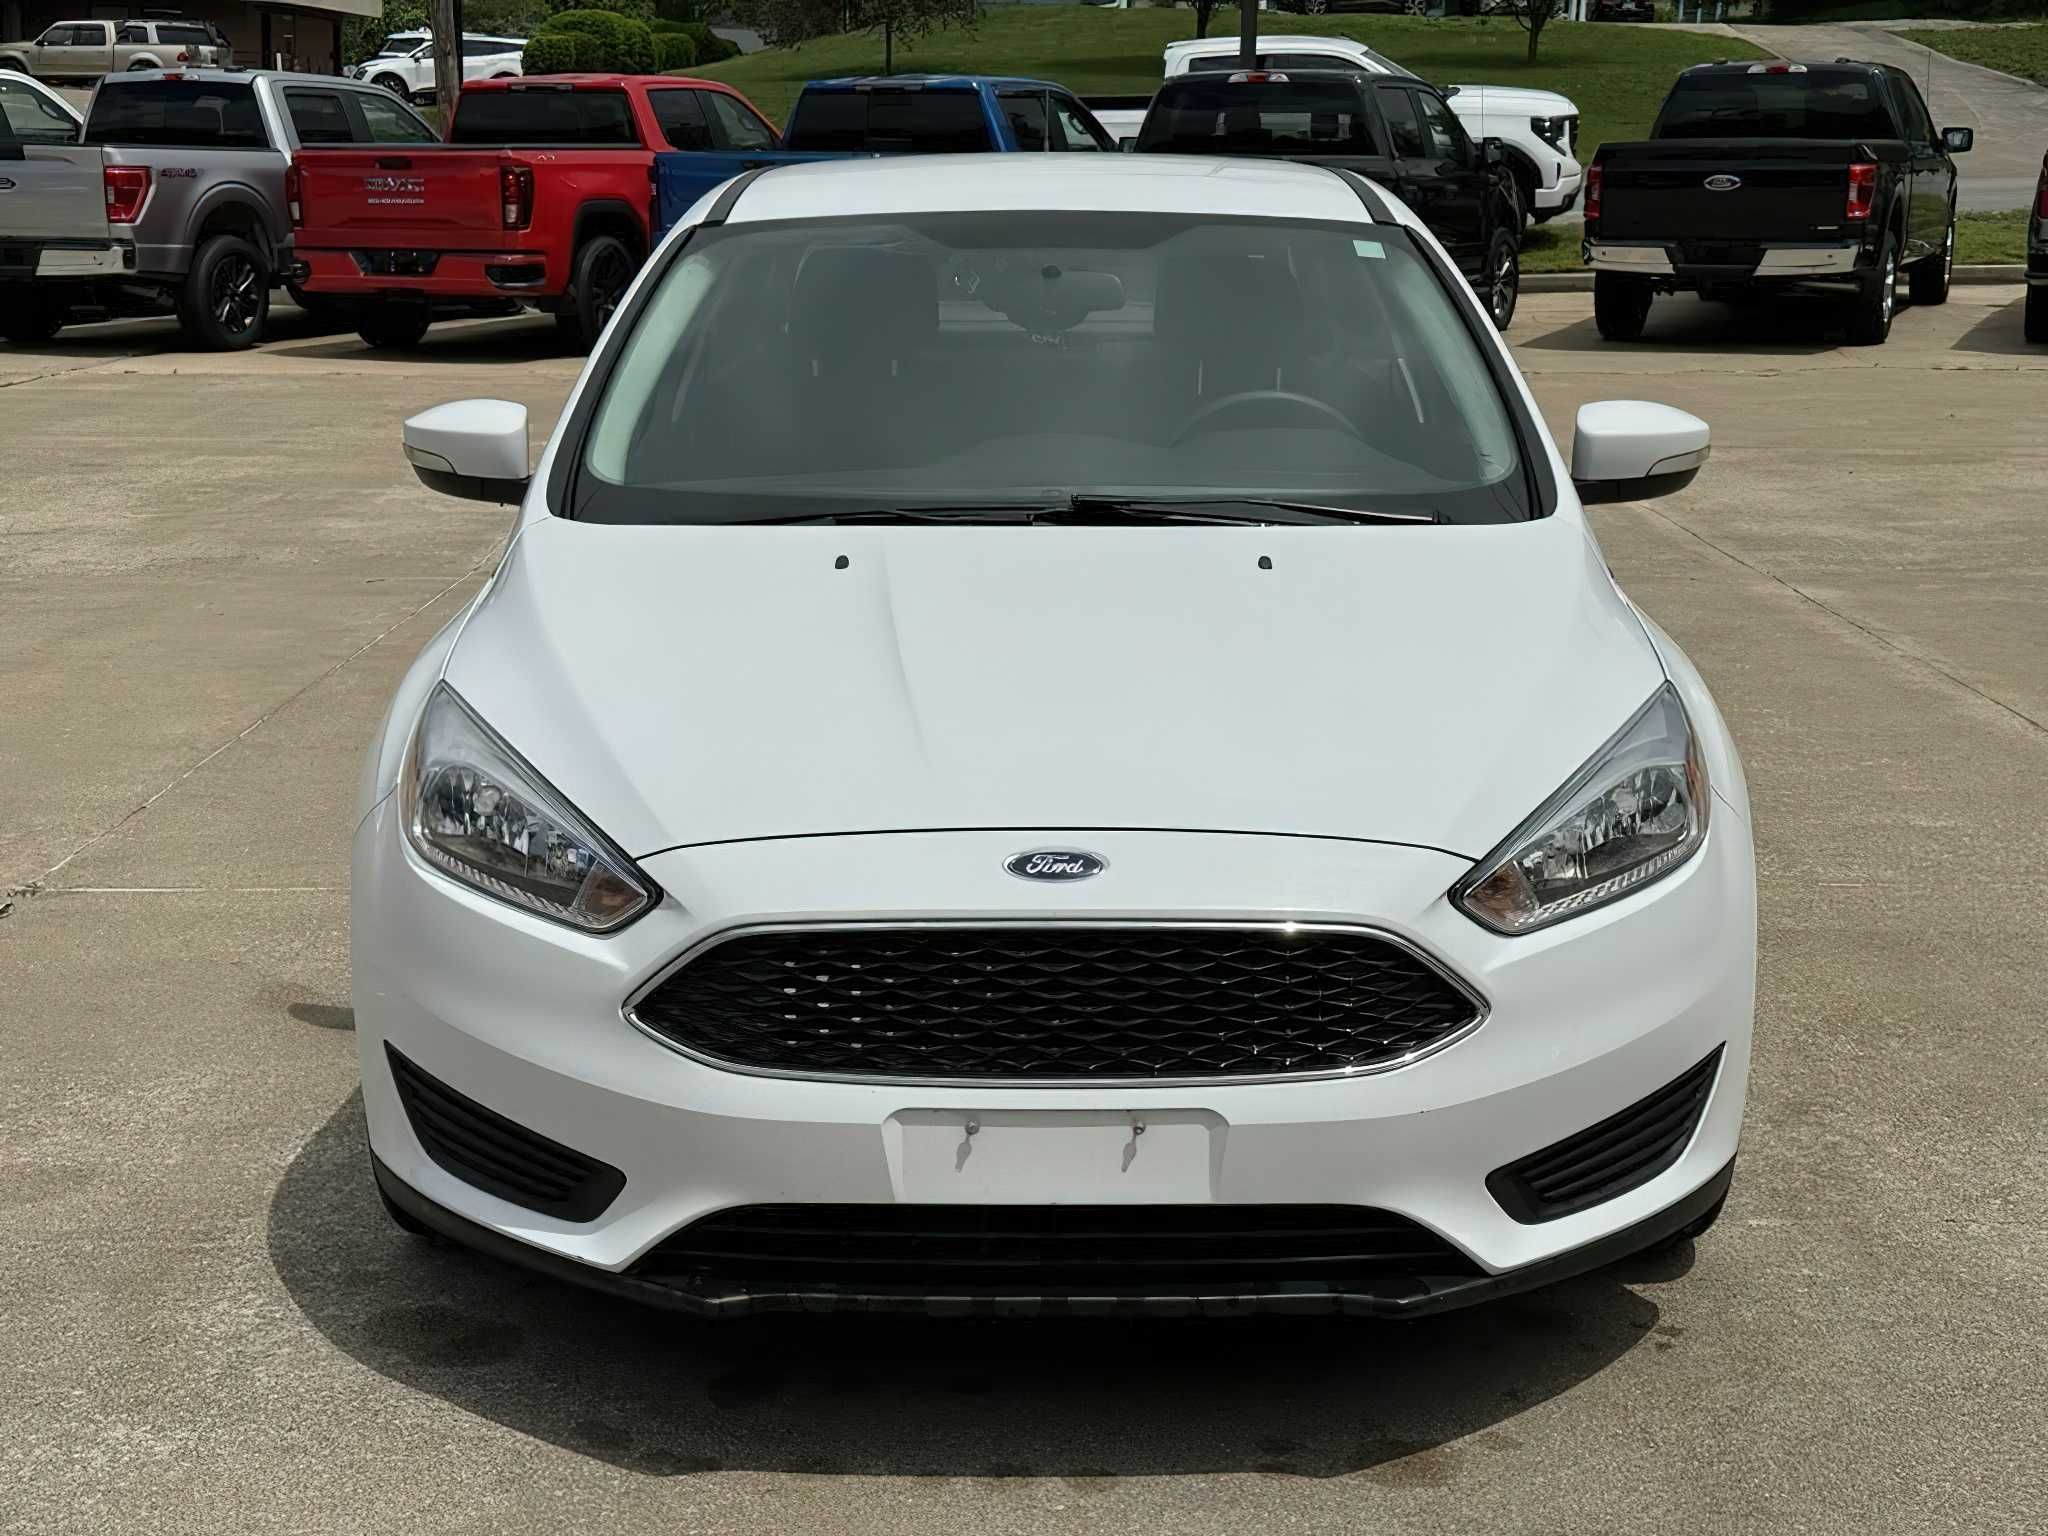 Ford Focus 2017 White